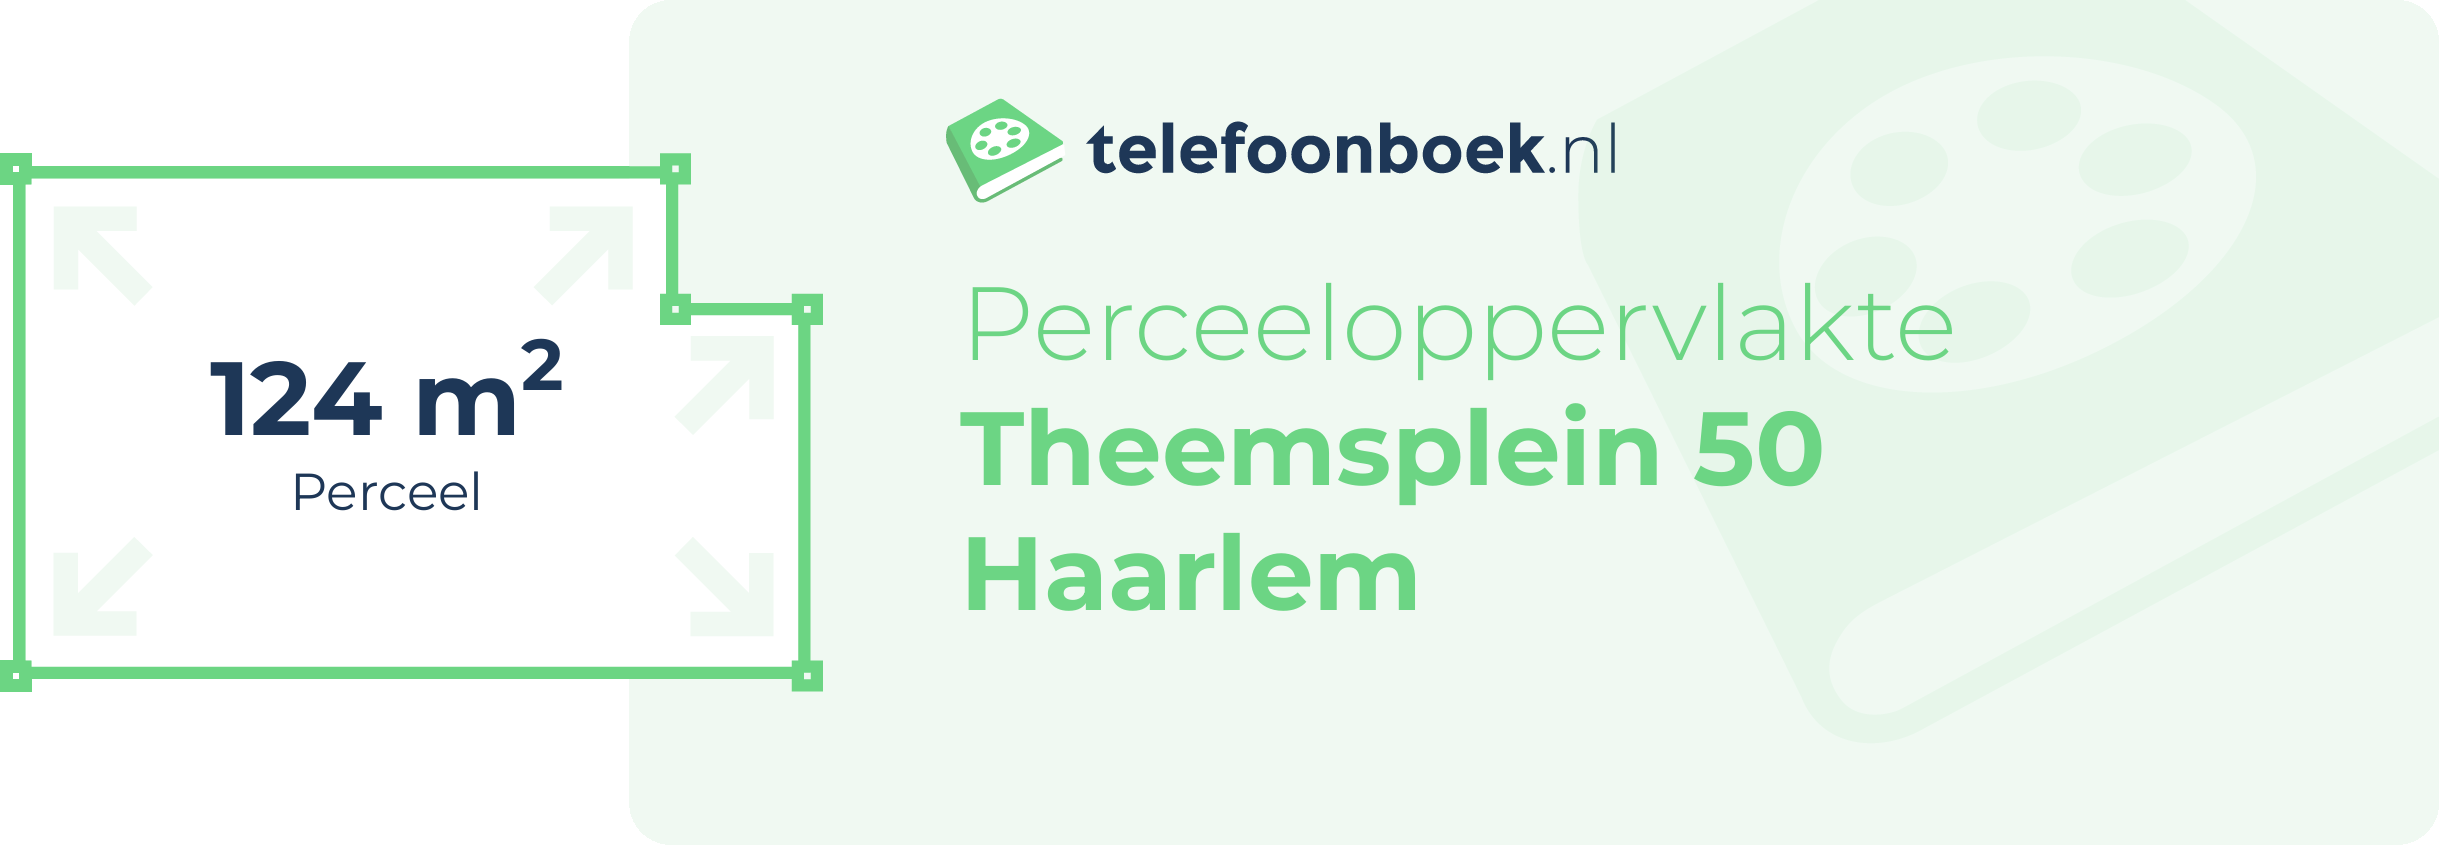 Perceeloppervlakte Theemsplein 50 Haarlem